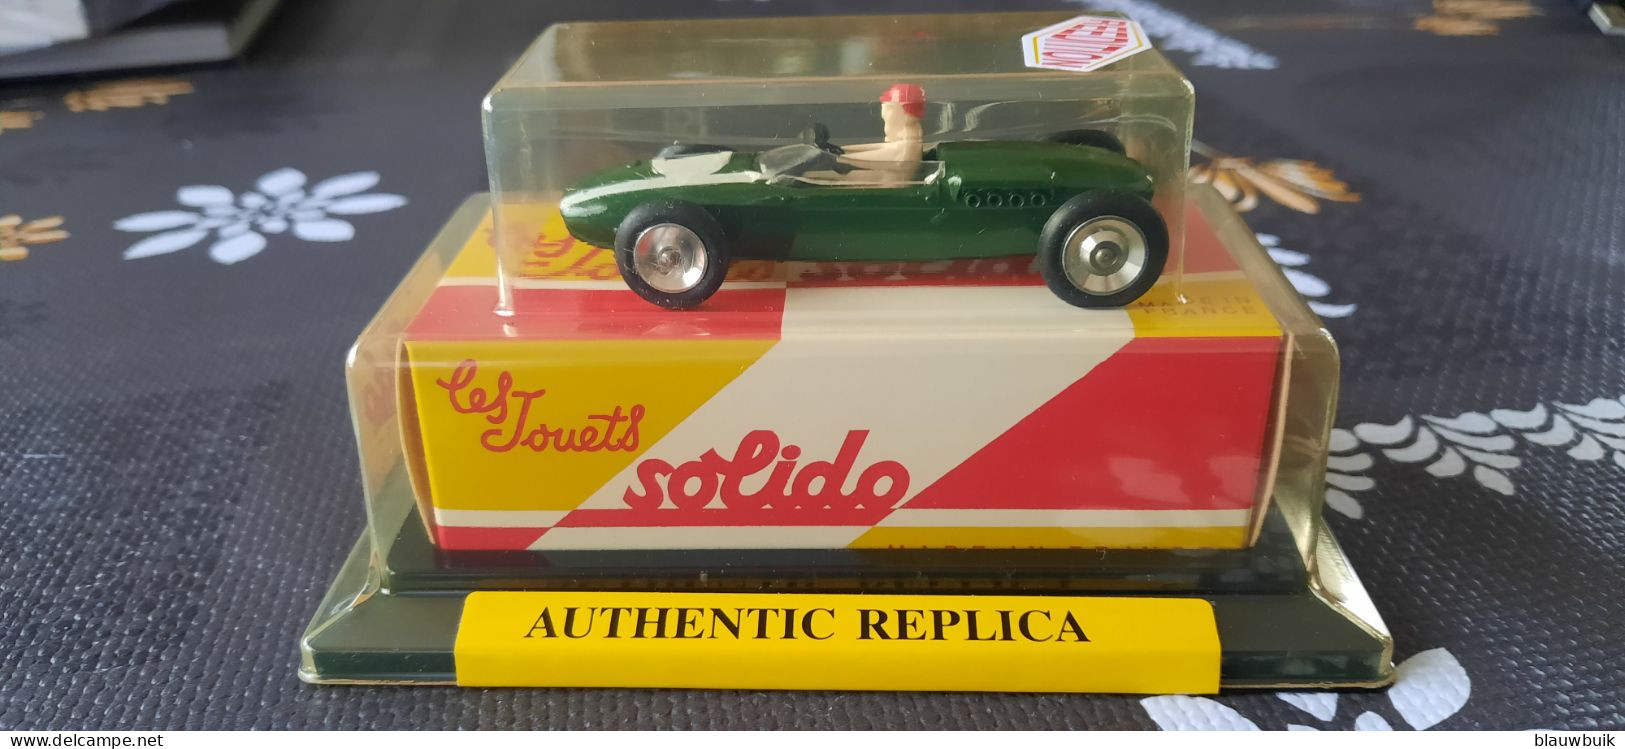 Solido 1105 "replique Authentique" Lotus F1 1960 - Solido